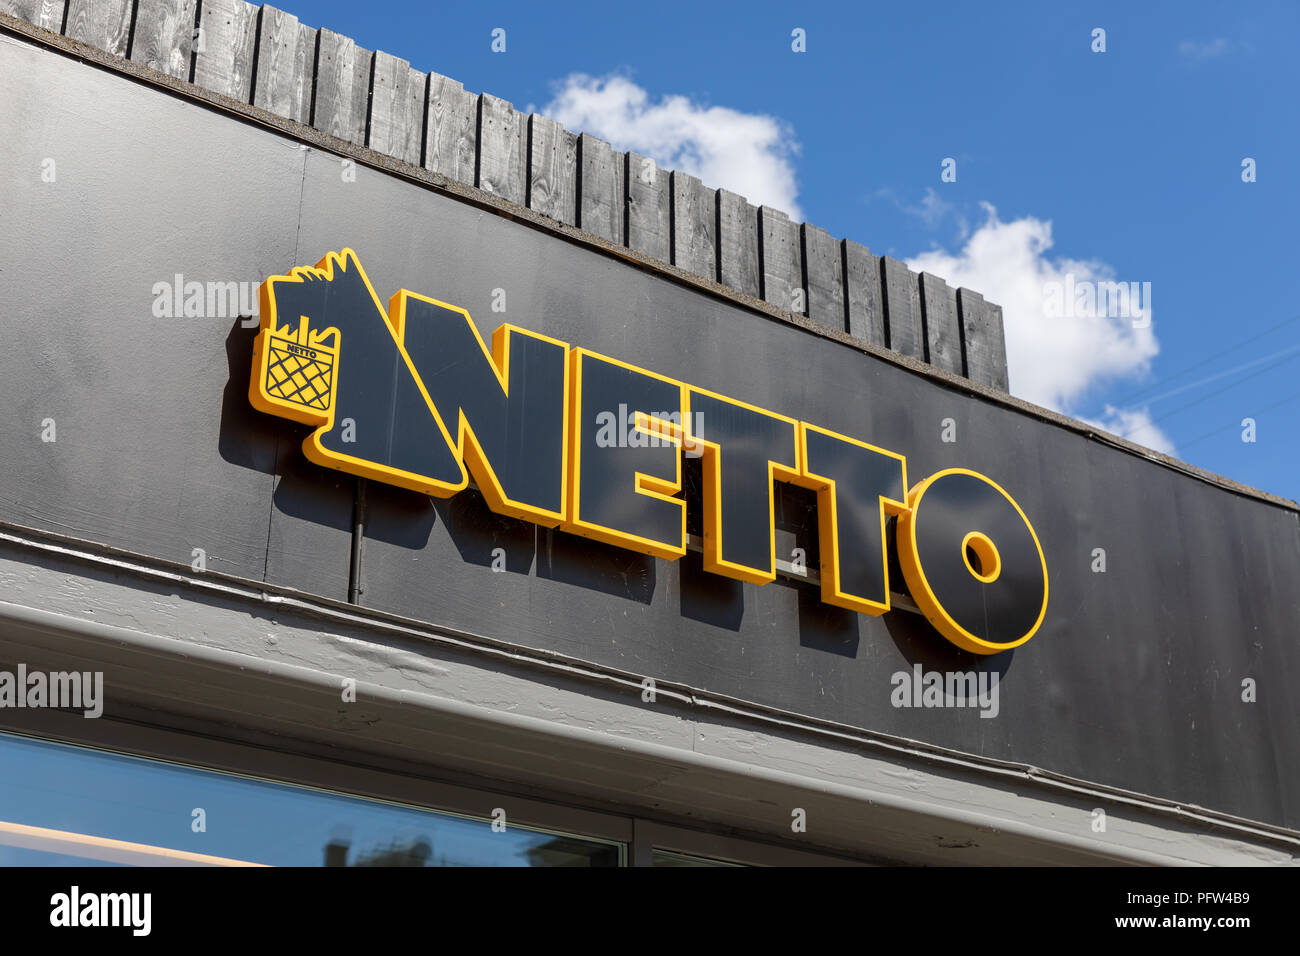 Netto (Danish discount supermarket chain) sign, Copenhagen, Denmark Stock Photo